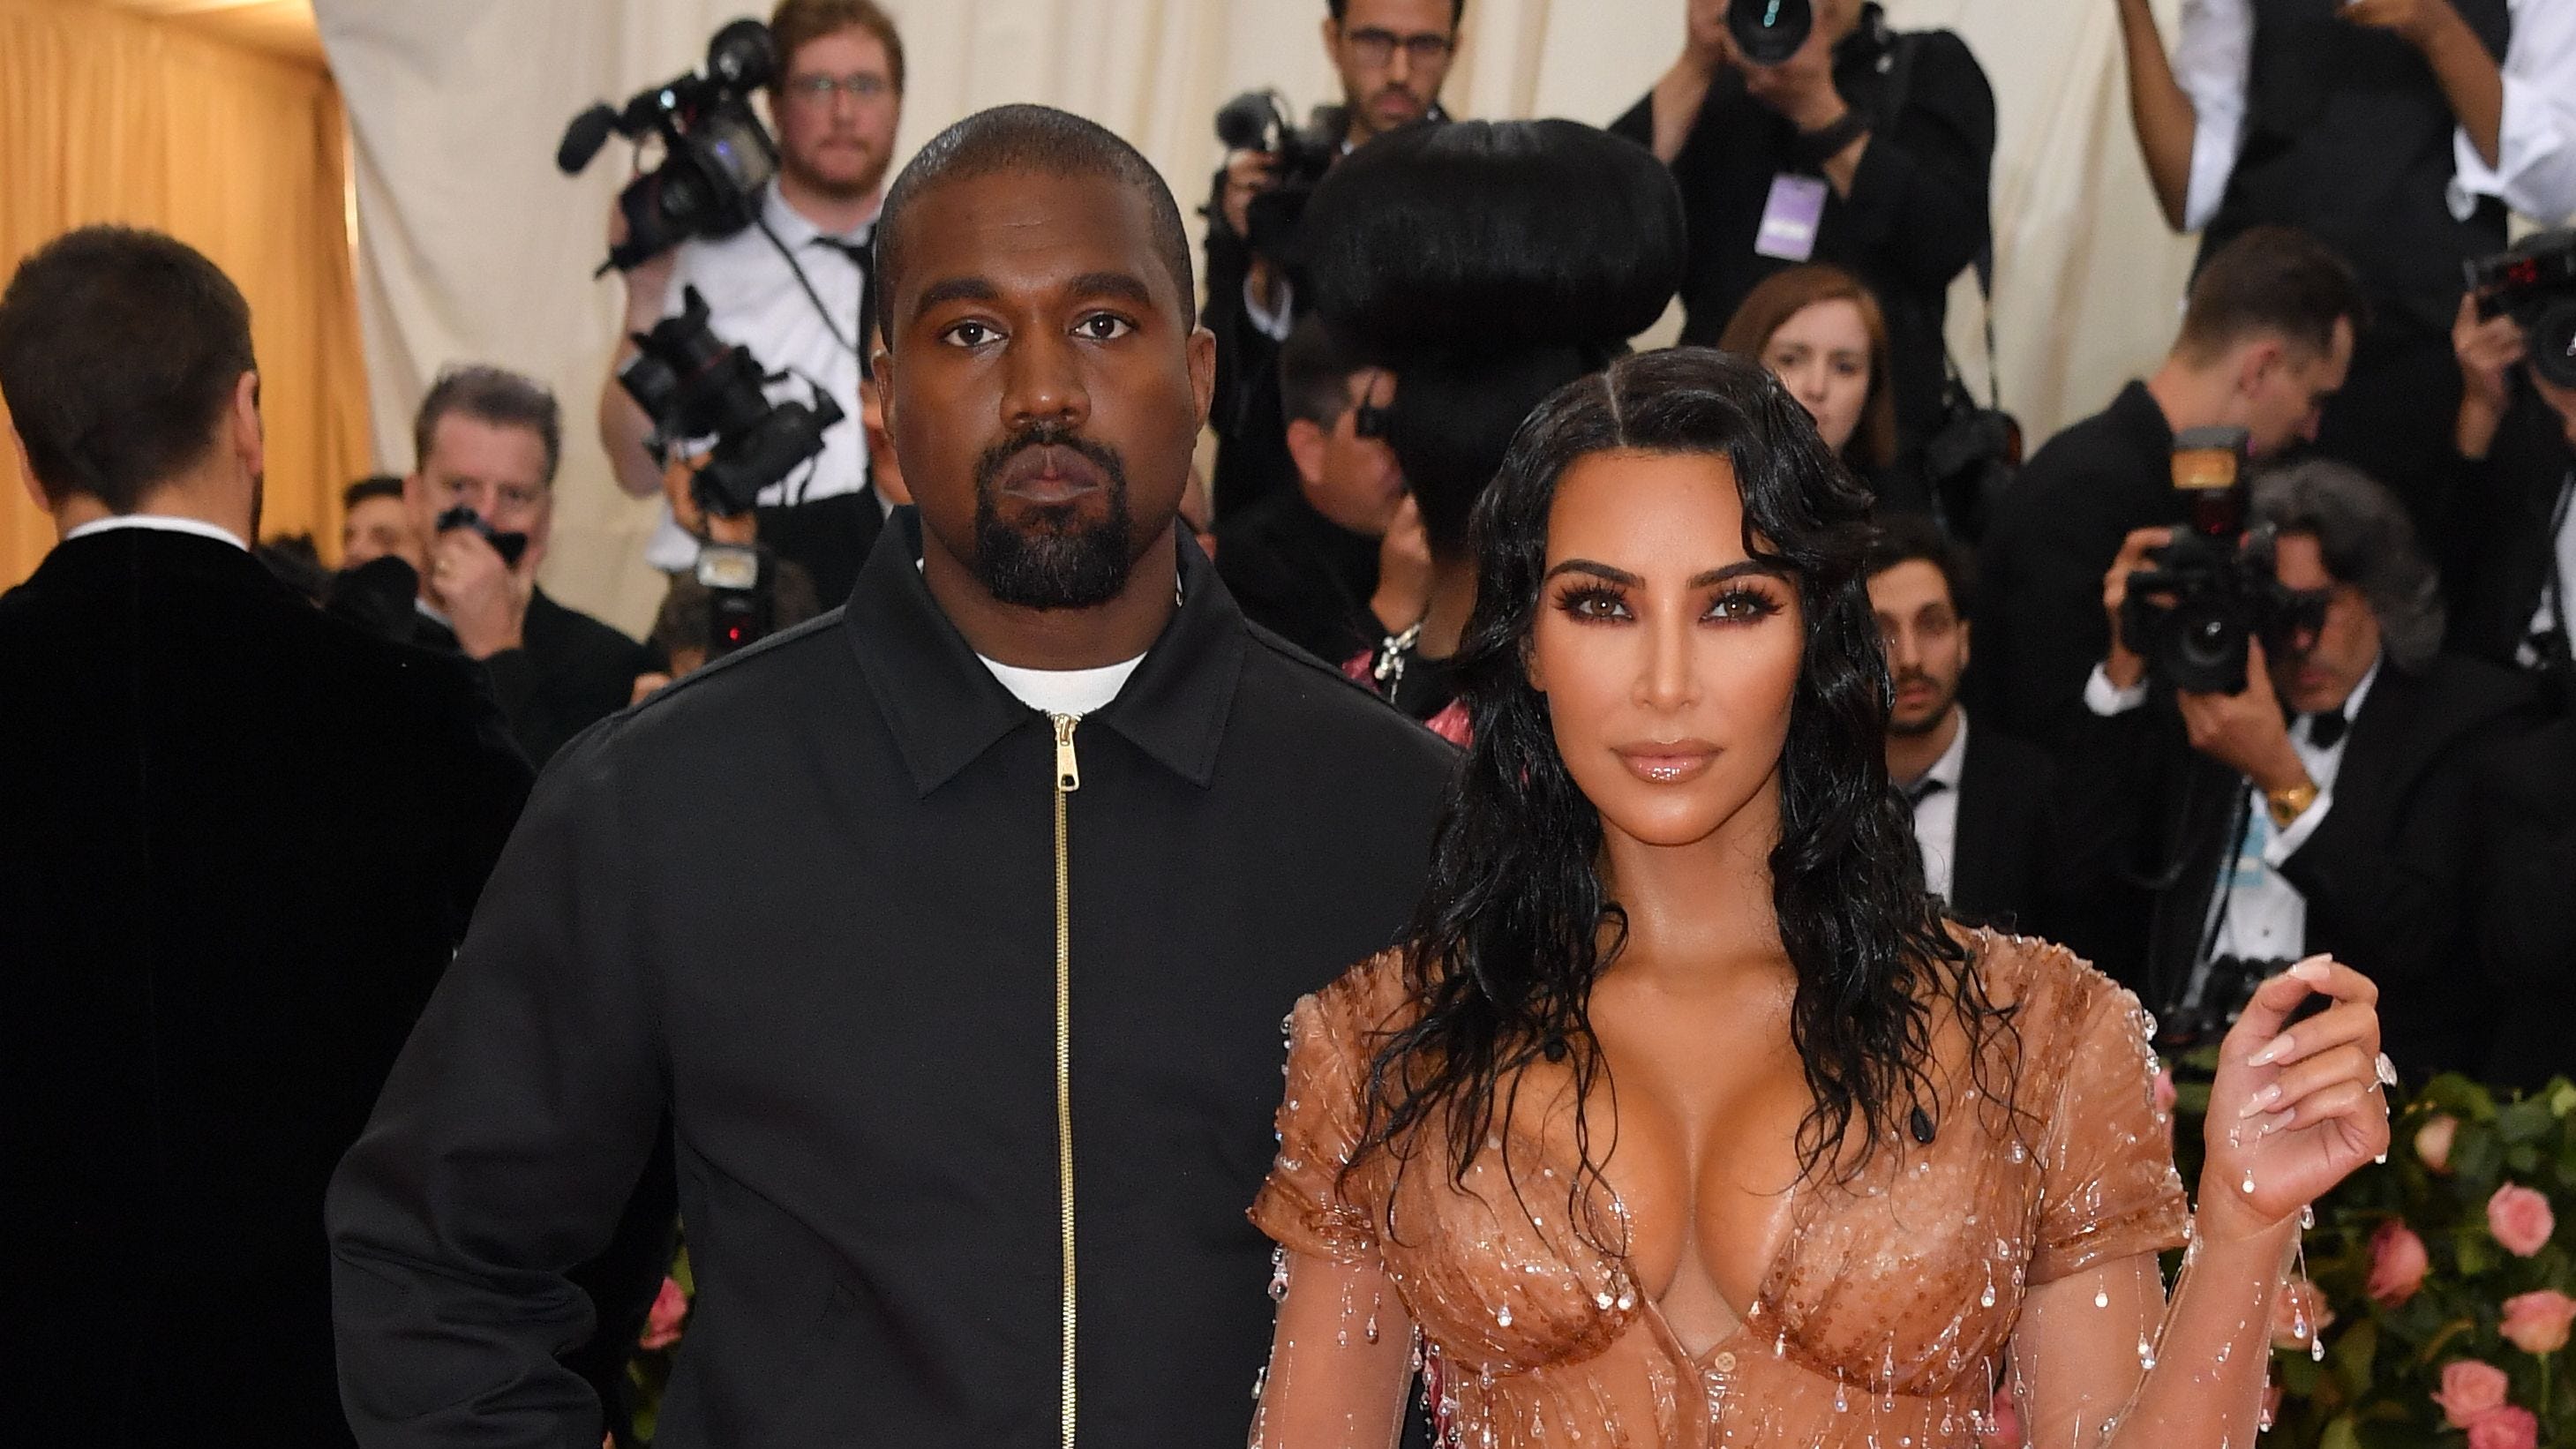 Kanye West slams Kim Kardashian 'sexy' dress; Tyler Cameron defends